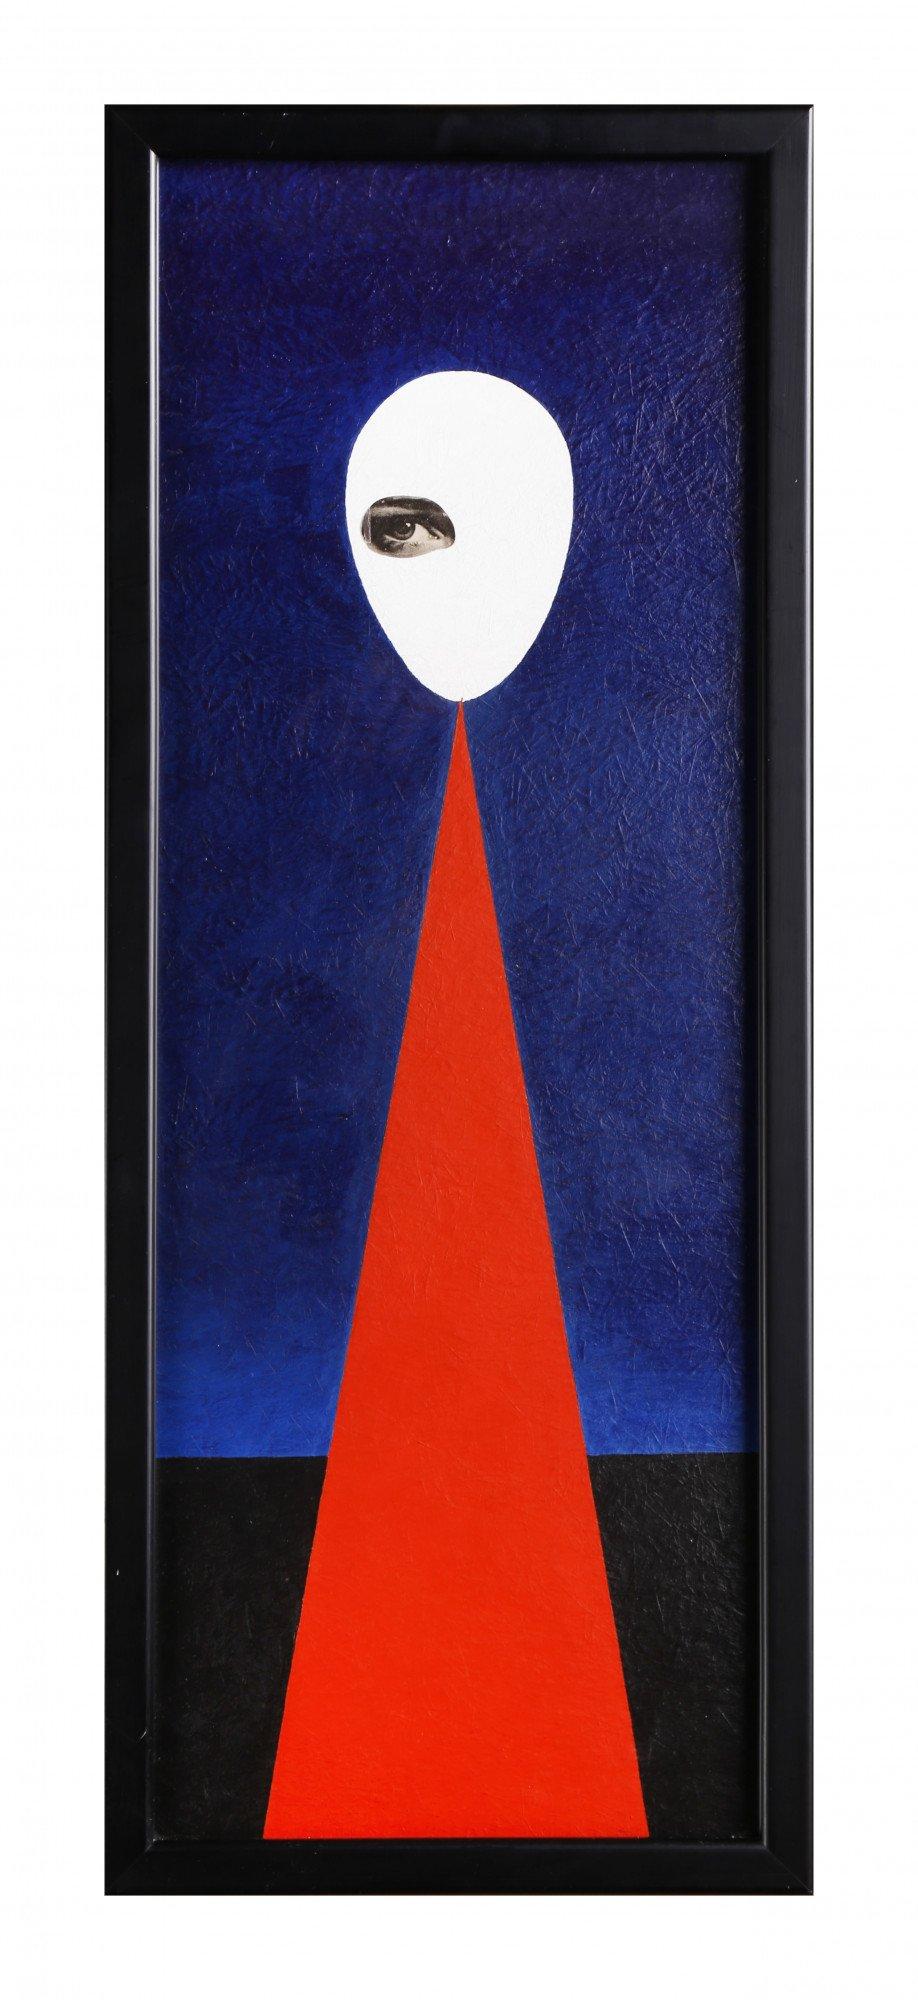 Surrealistische eifrmige Acrylmalerei, Blau & Rot, figurale abstrakte Collage – Painting von Clarence Holbrook Carter